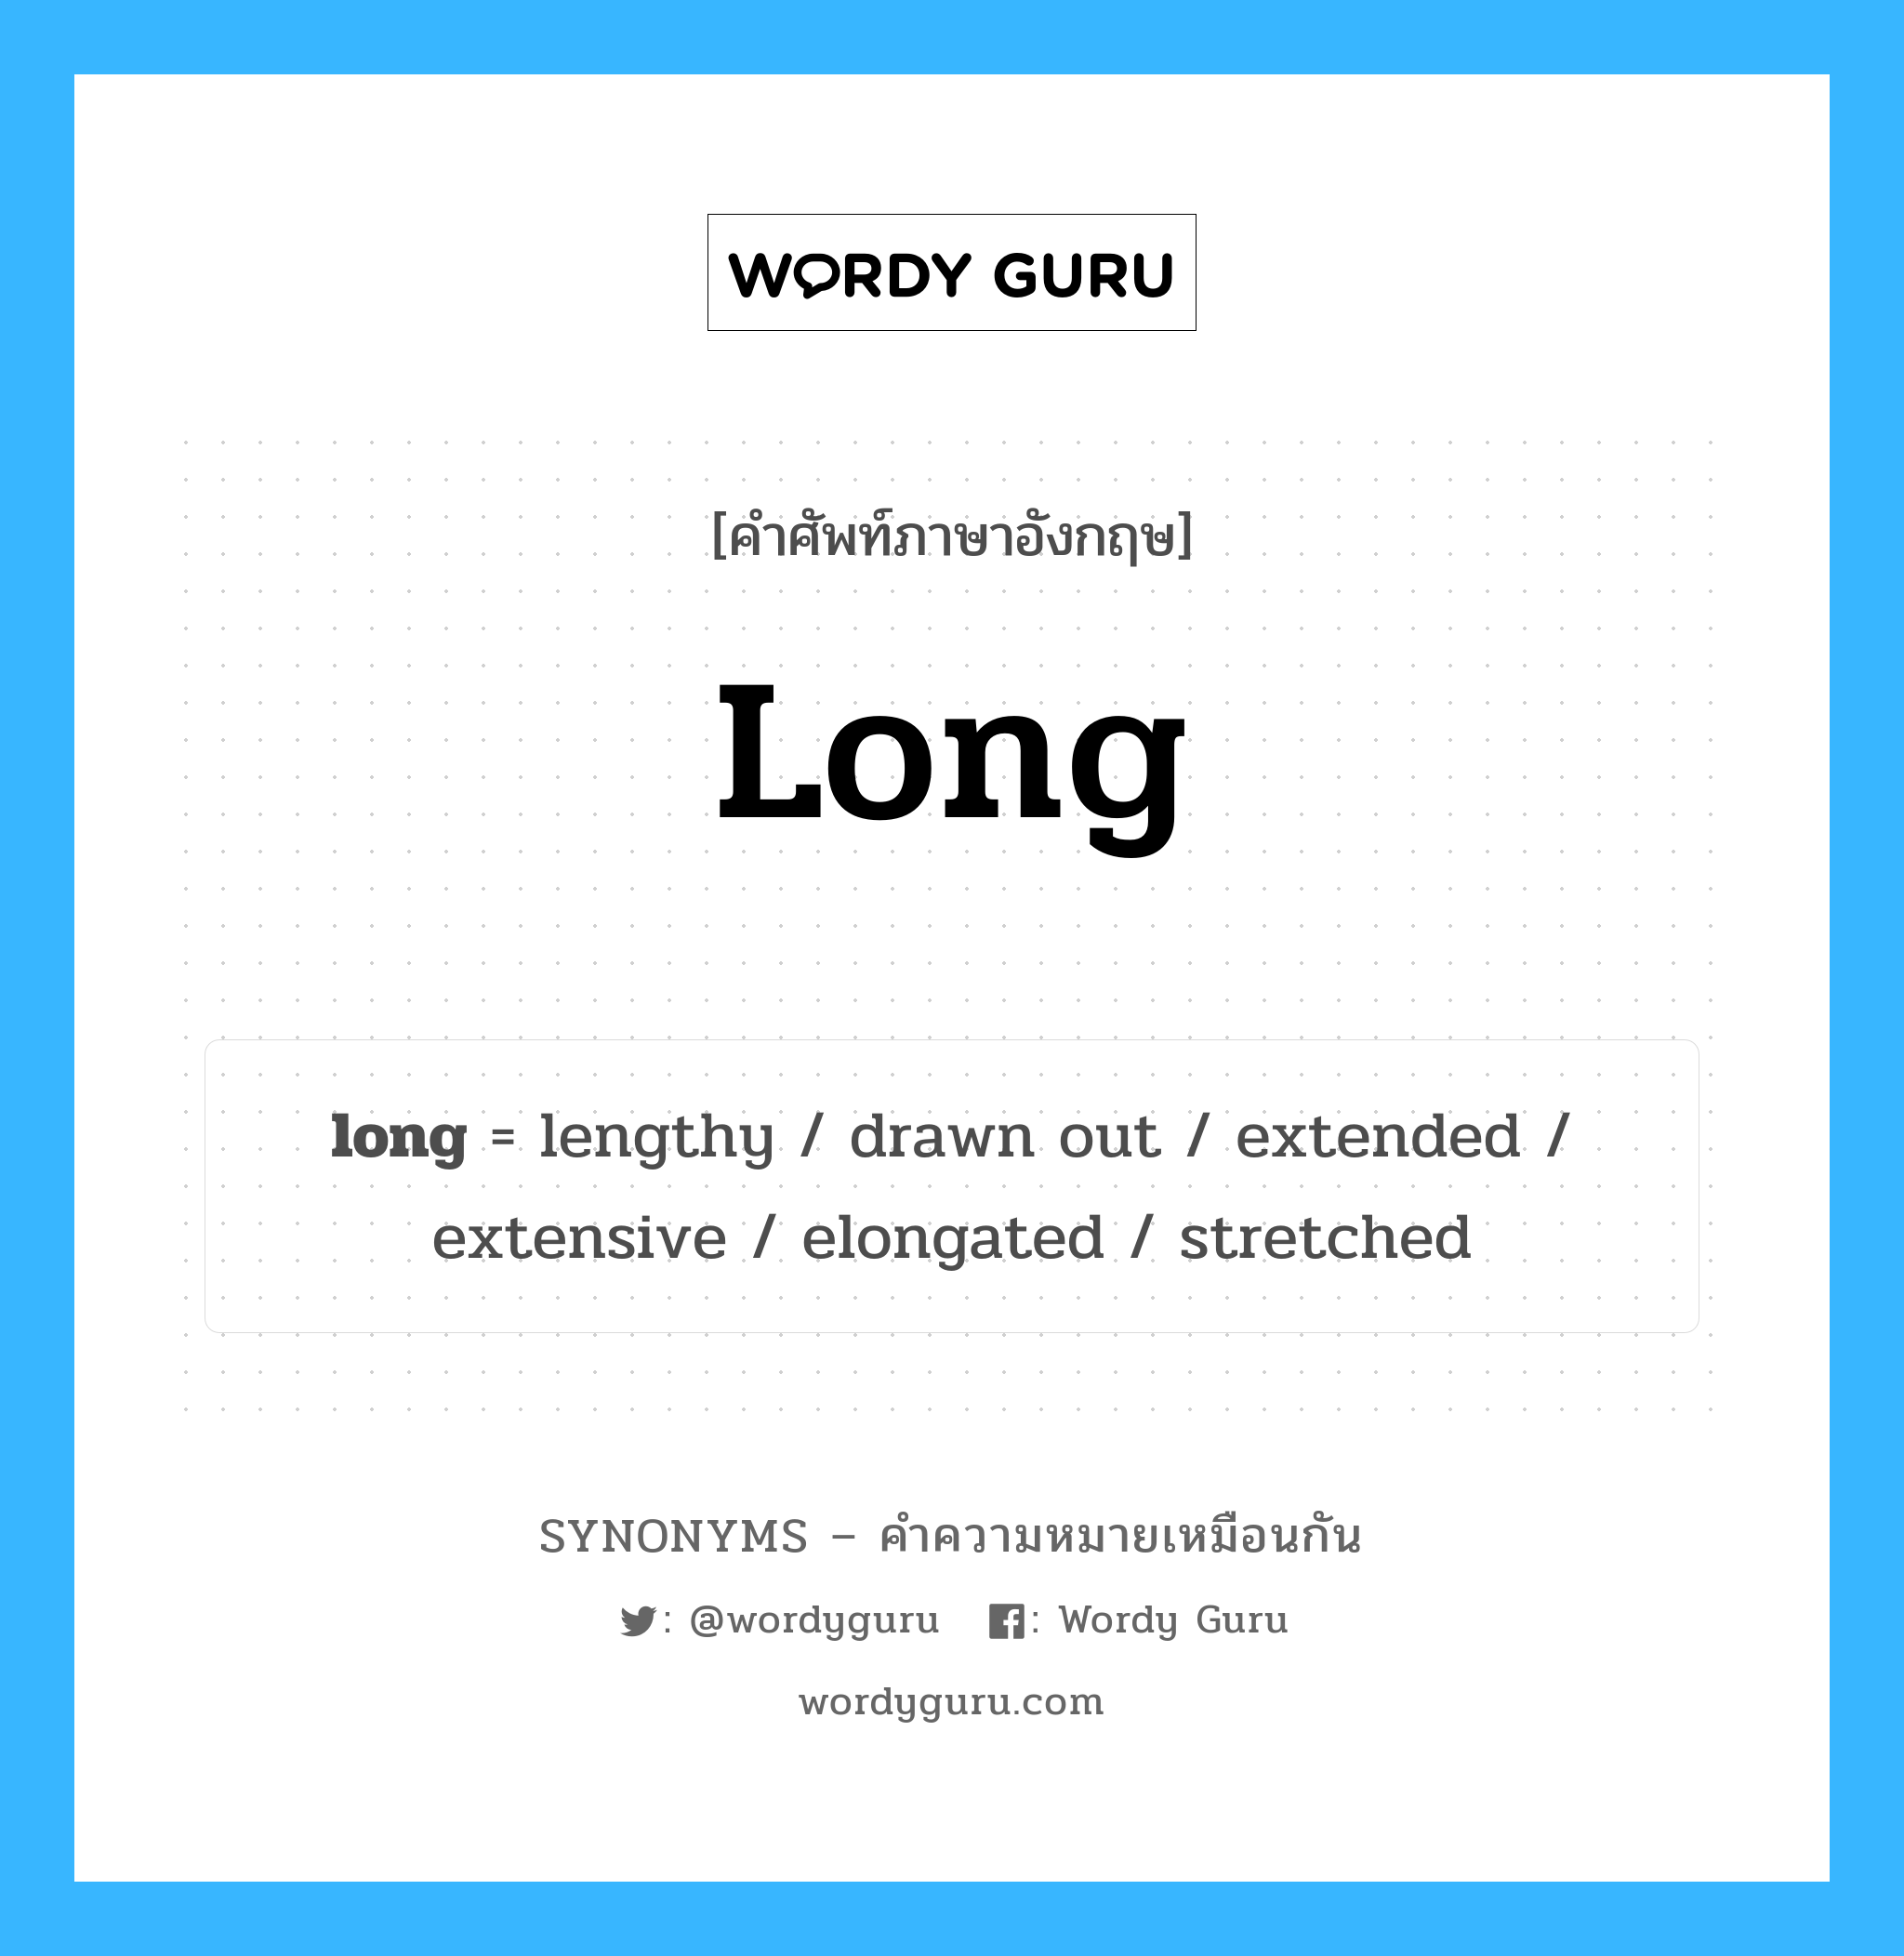 extensive เป็นหนึ่งใน long และมีคำอื่น ๆ อีกดังนี้, คำศัพท์ภาษาอังกฤษ extensive ความหมายคล้ายกันกับ long แปลว่า กว้างขวาง หมวด long